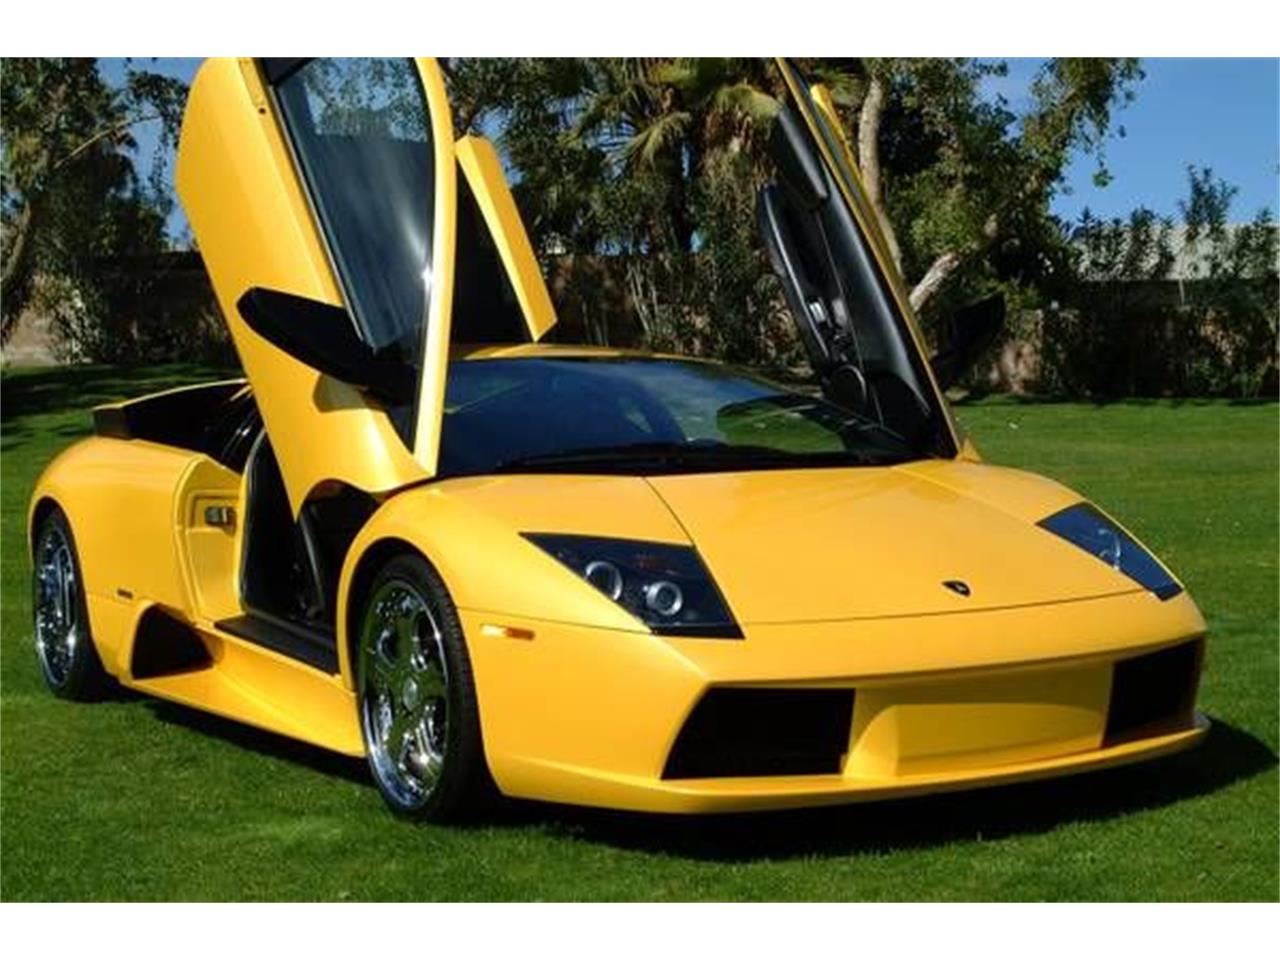 2003 Lamborghini Murcielago for Sale | ClassicCars.com ...